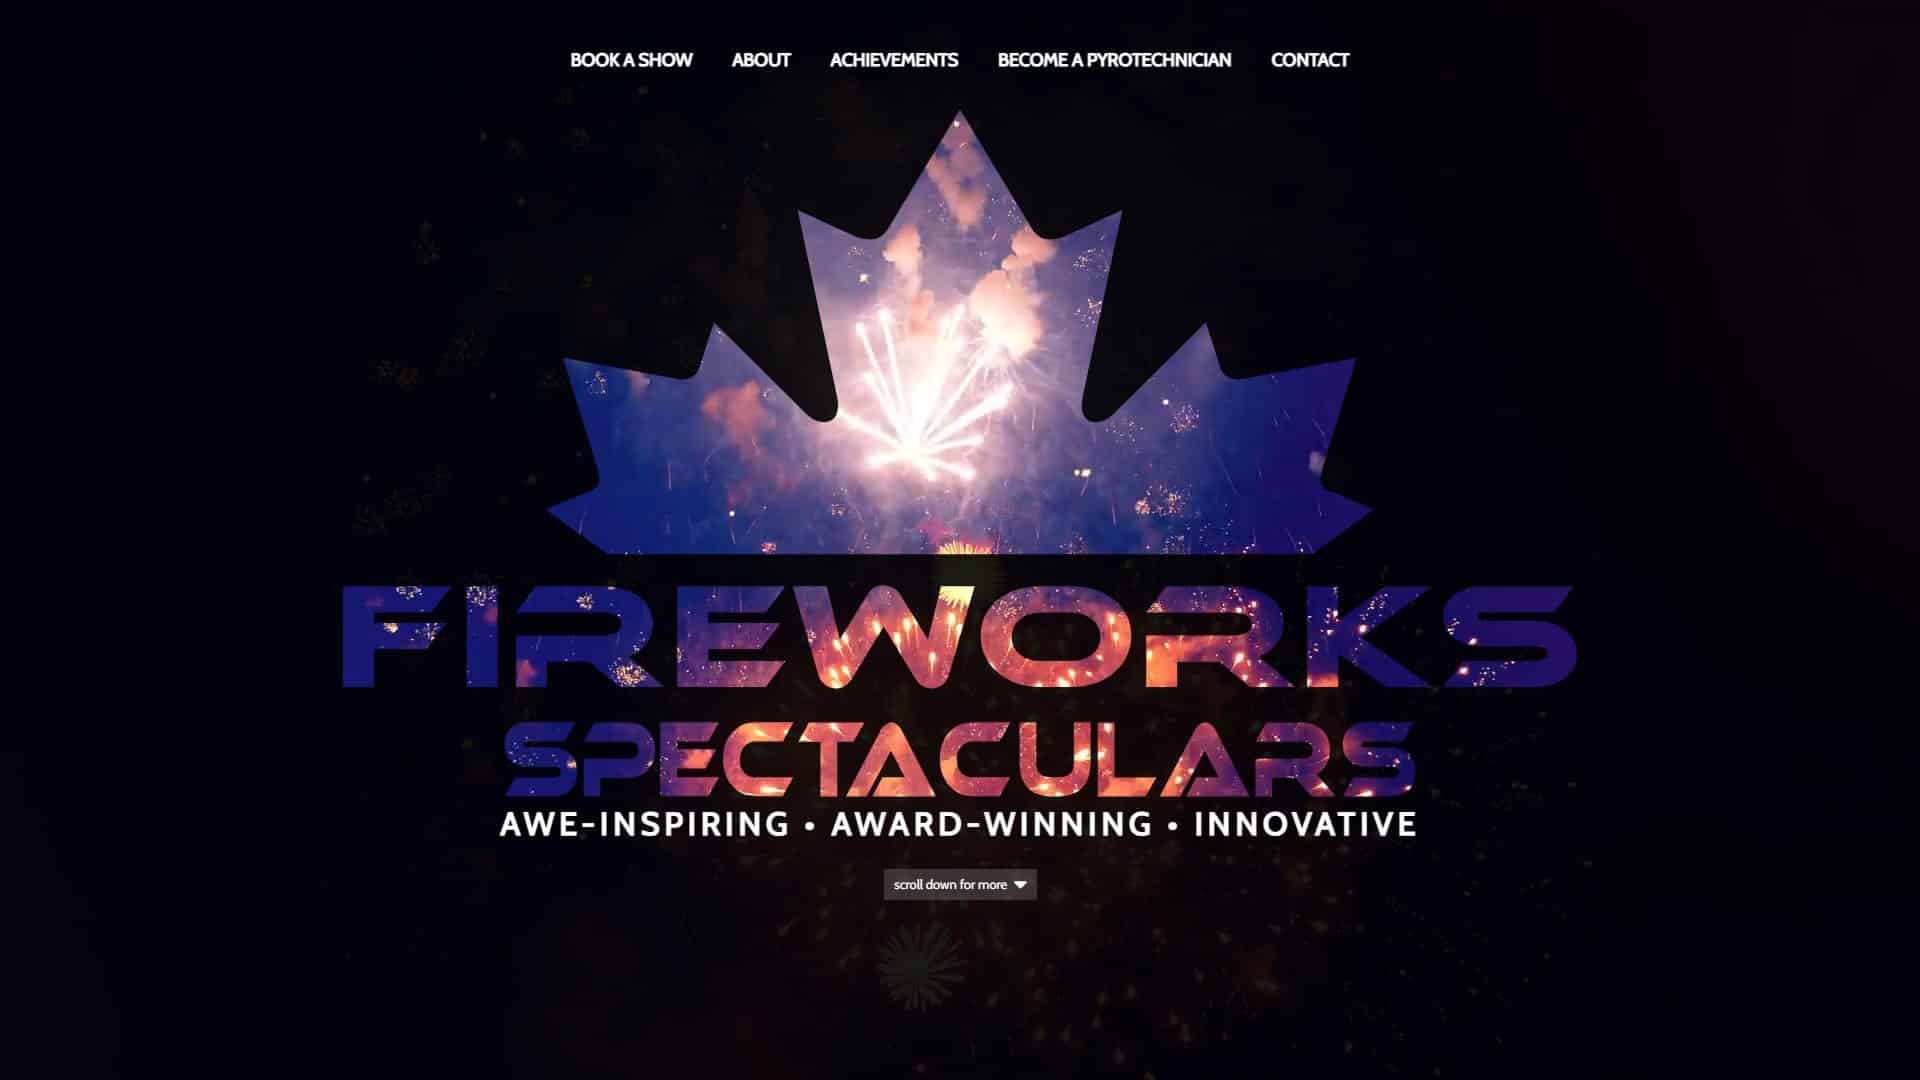 fireworks-spectaculars